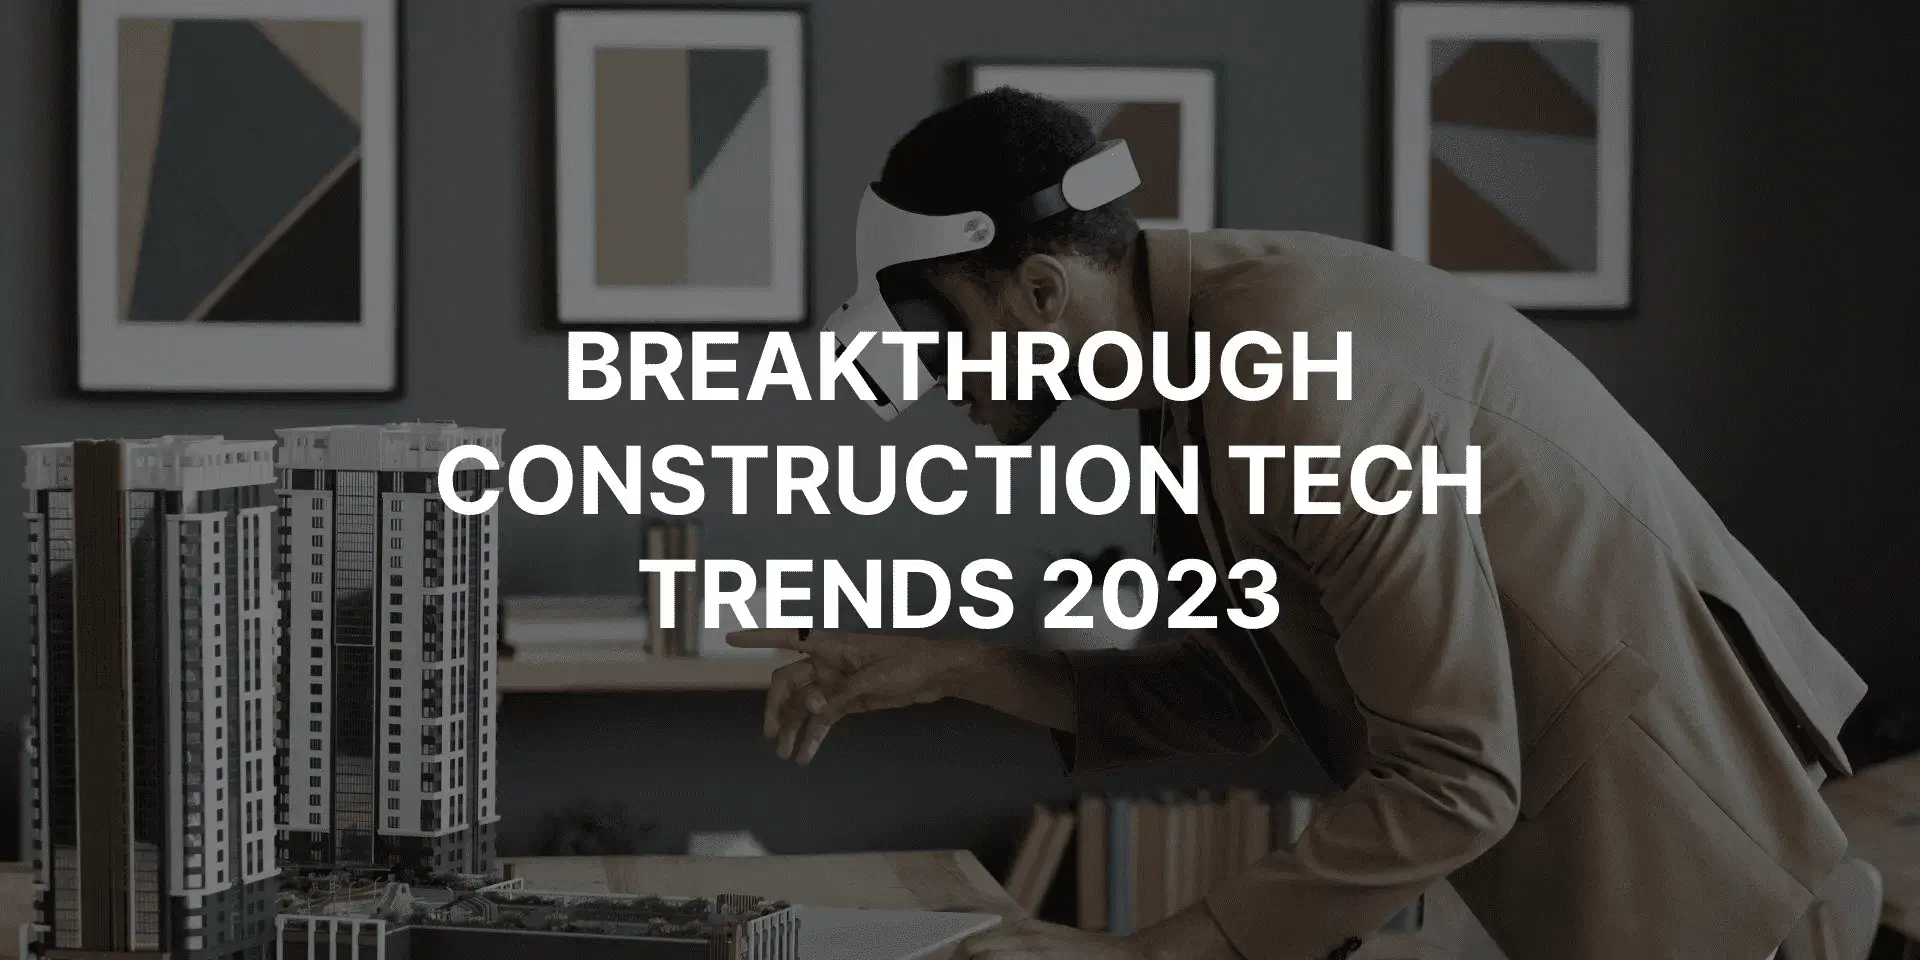 5 Breakthrough Construction Tech Trends for 2023